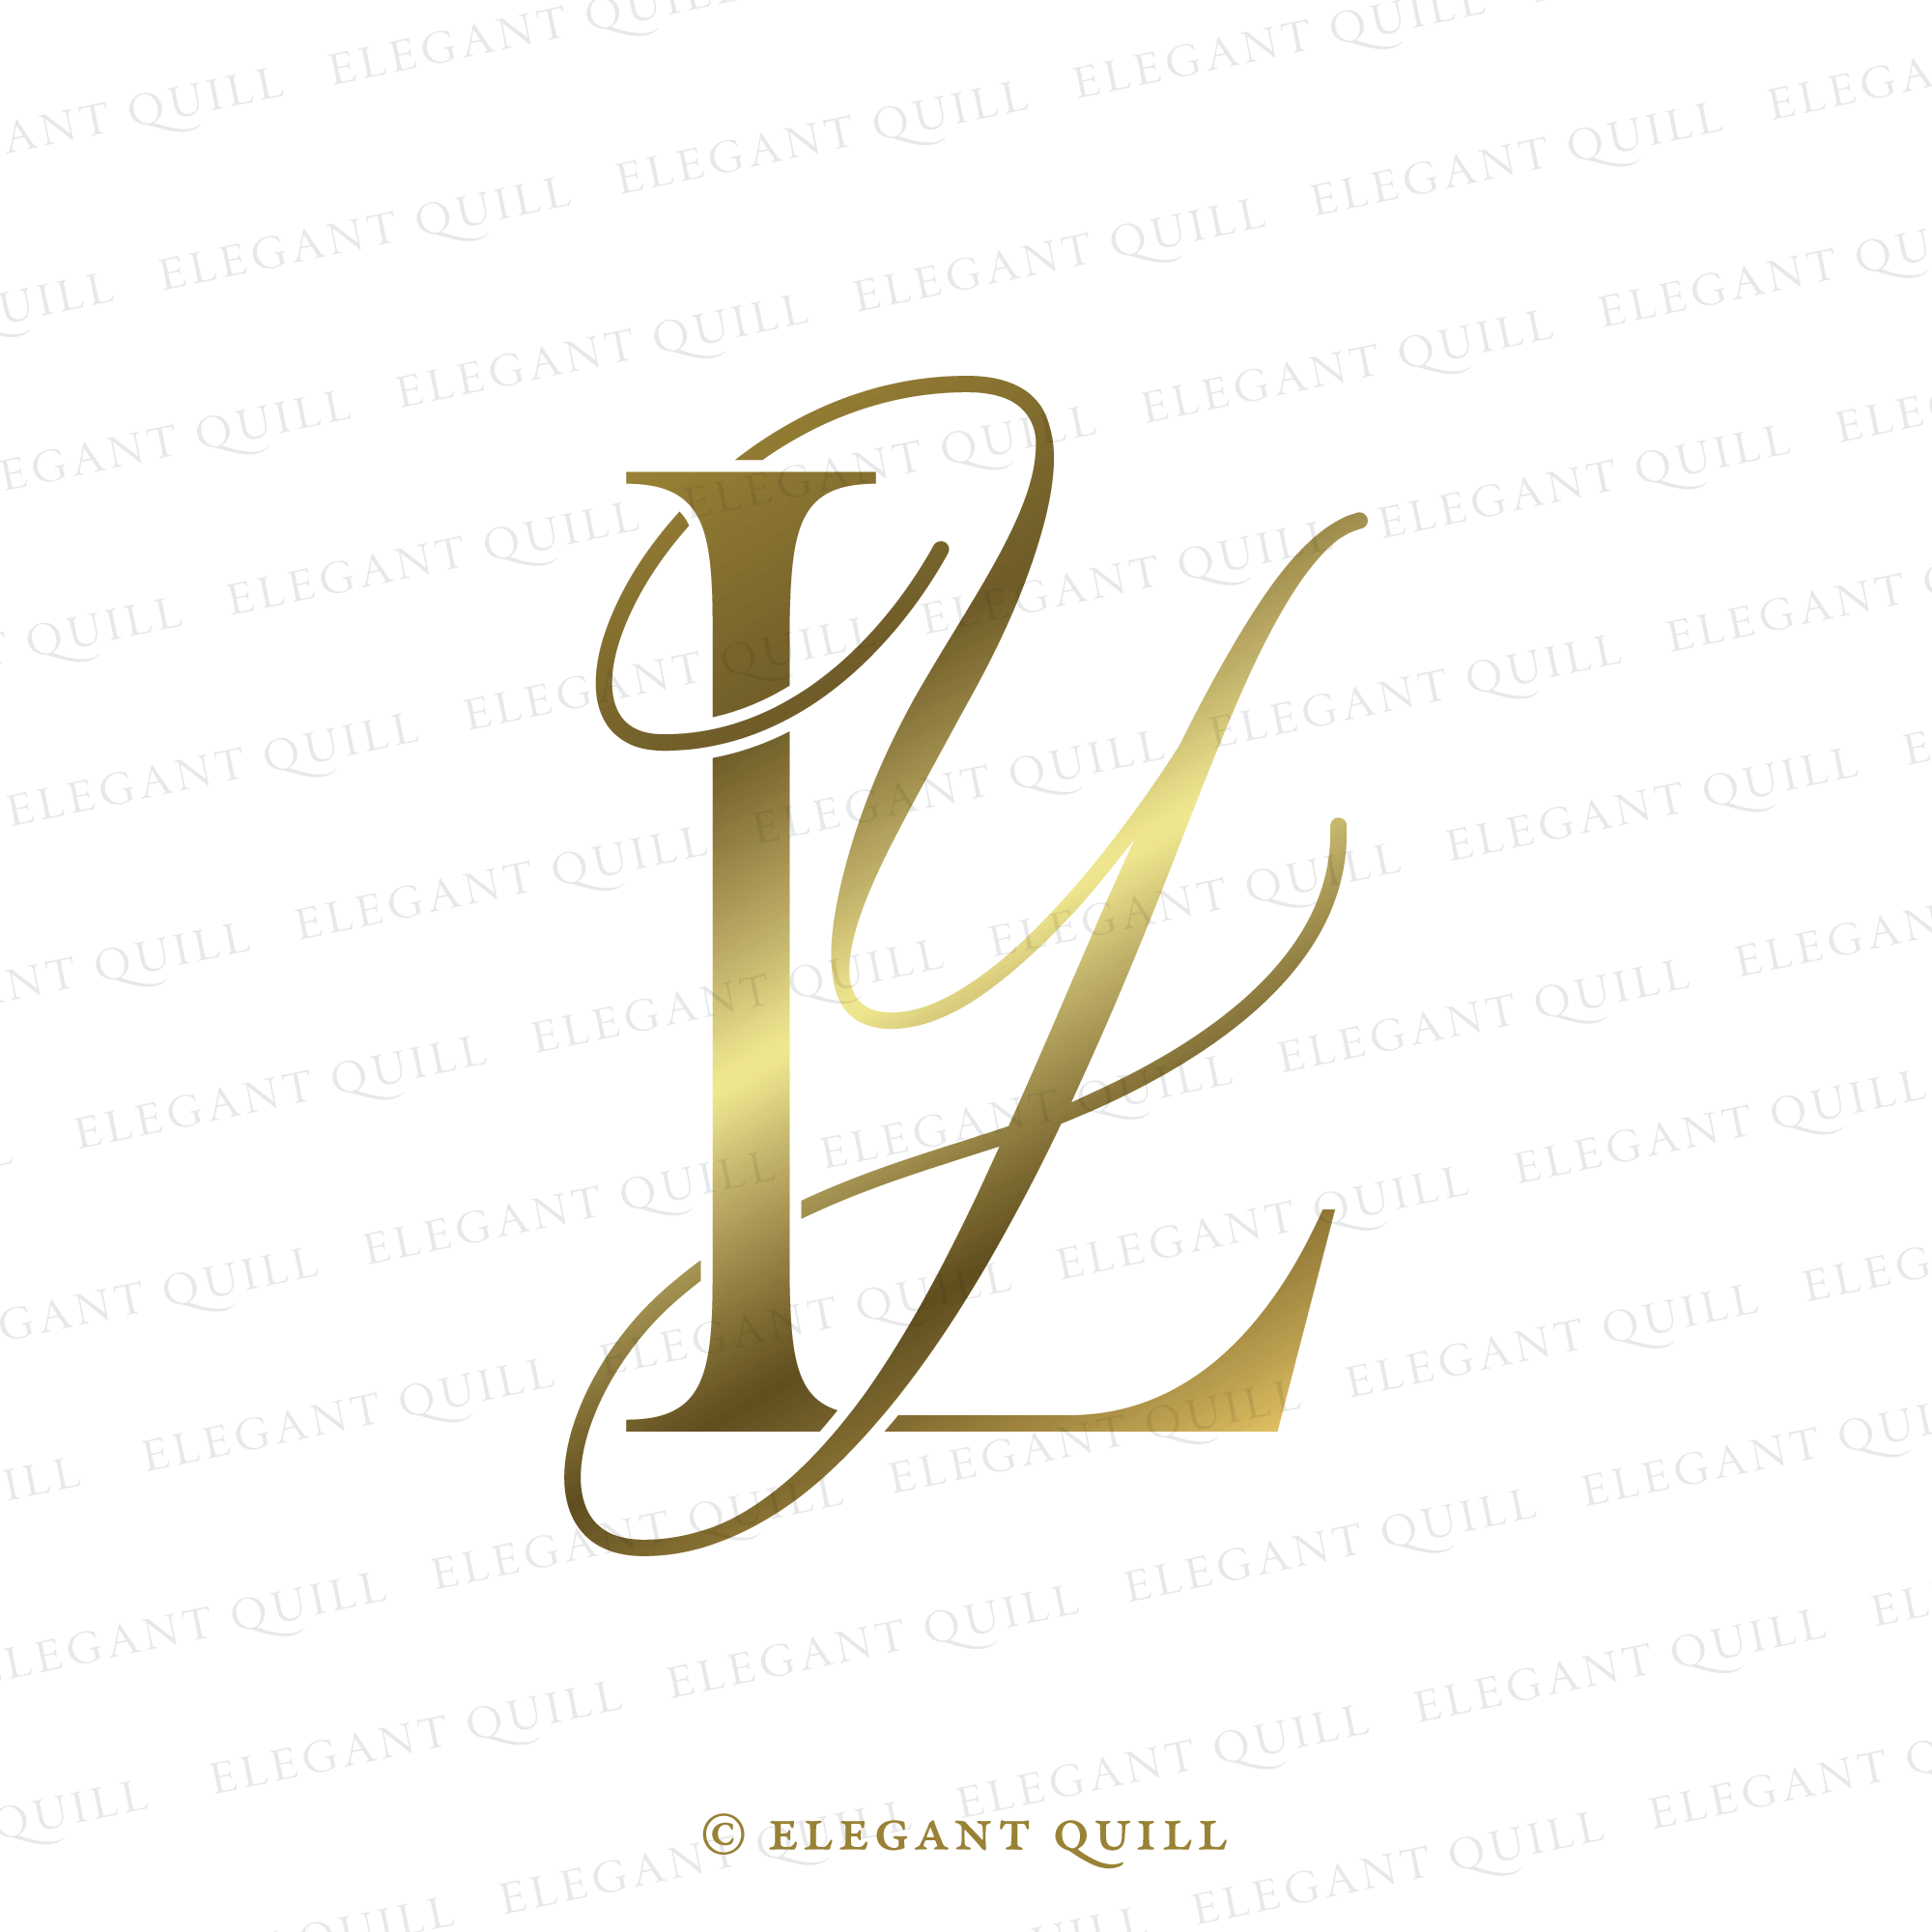 Yl initials letter wedding monogram logos Vector Image